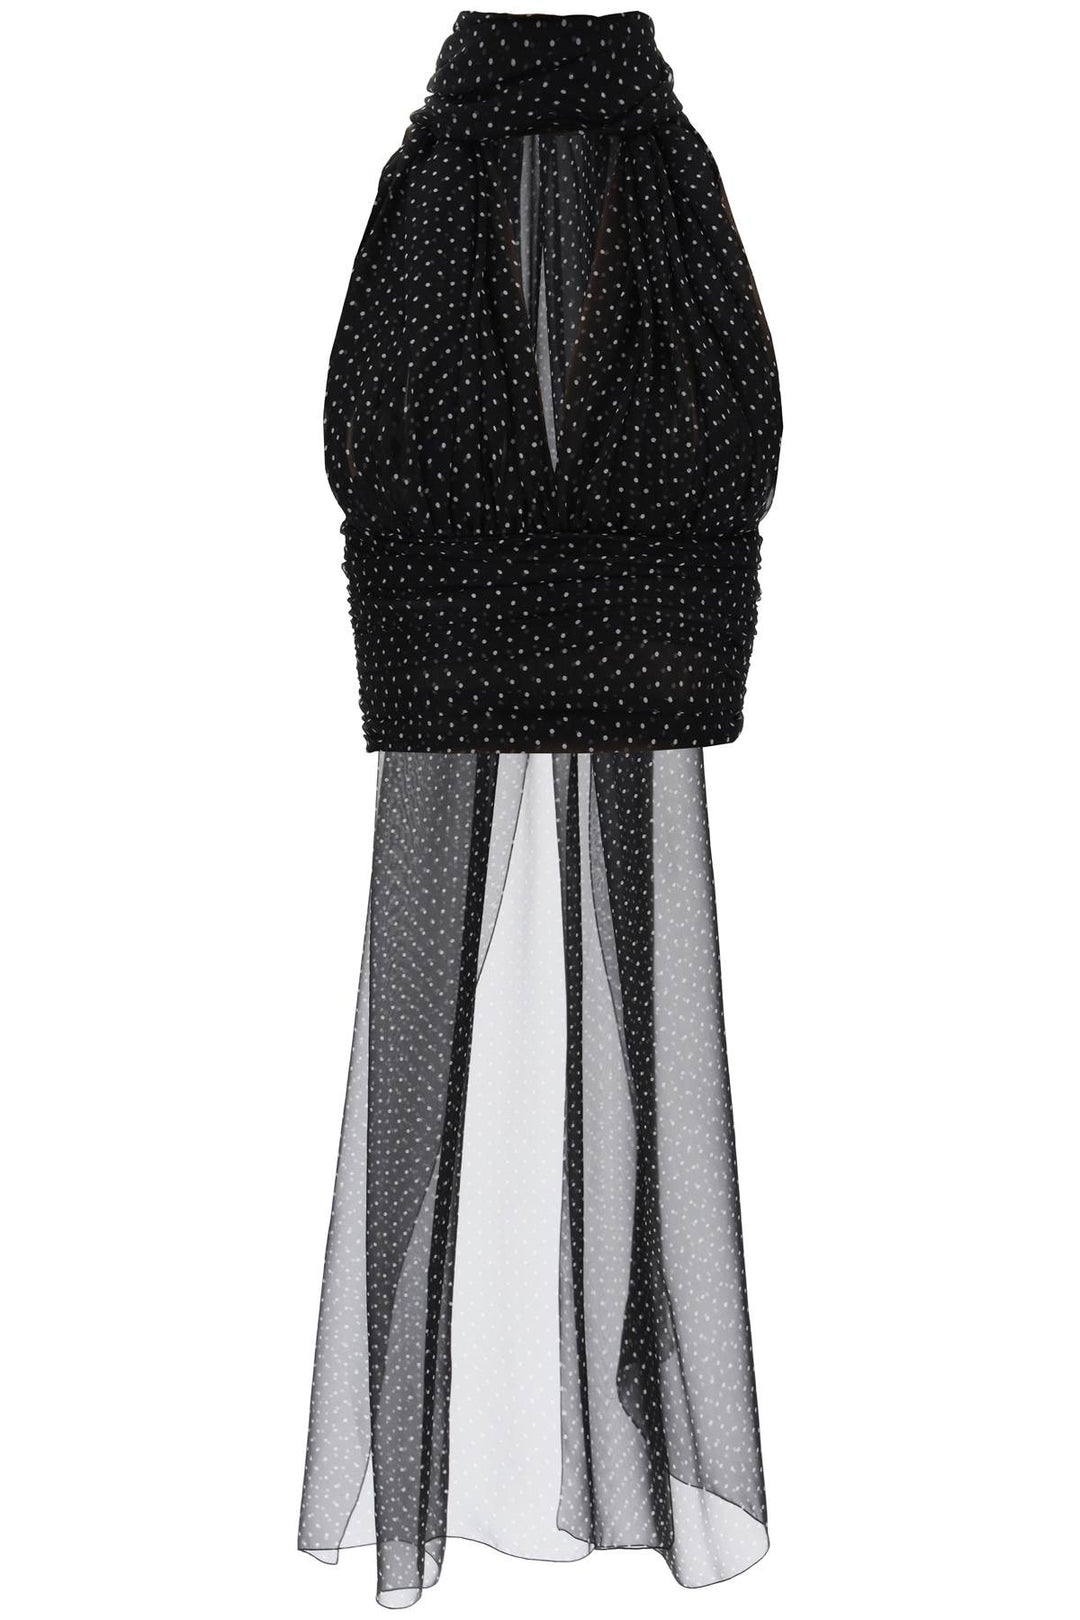 Dolce & Gabbana Chiffon Top With Scarf Accessory   Nero